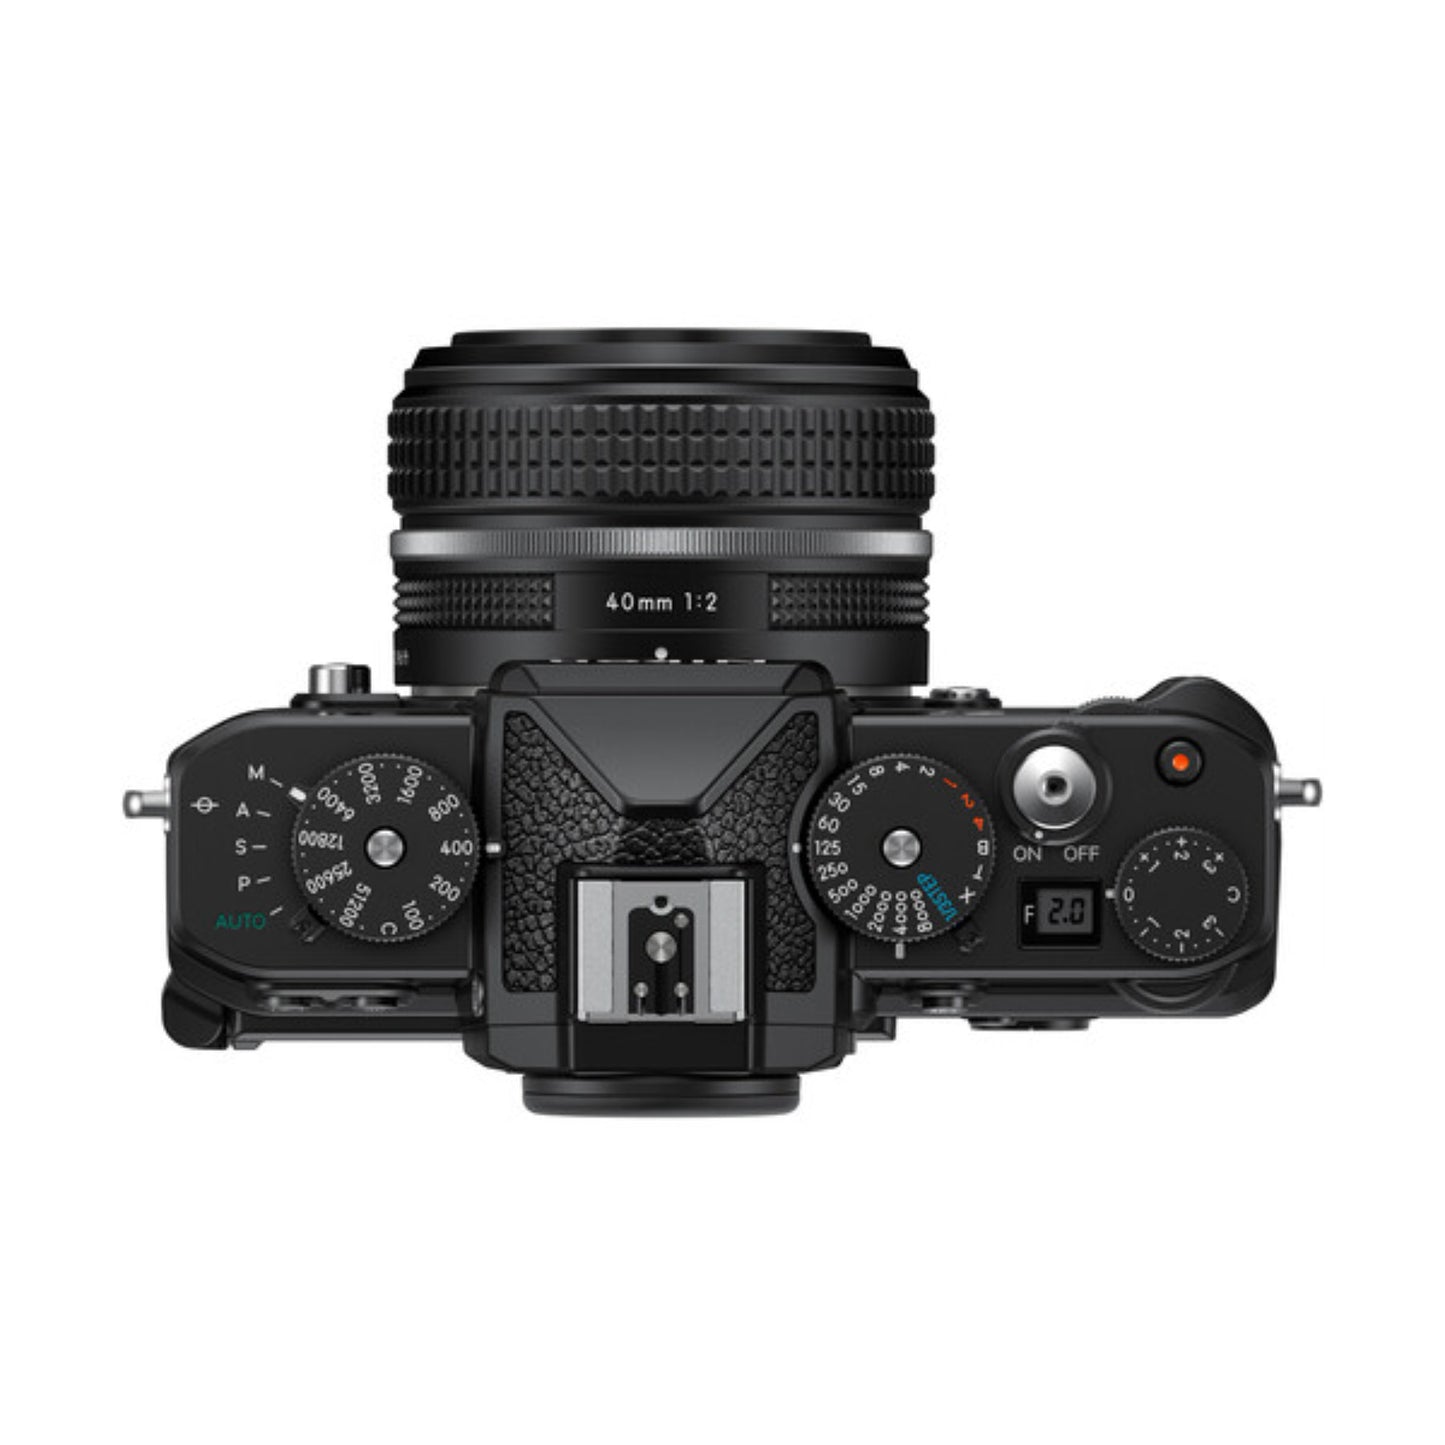 Nikon Zf Mirrorless Camera with 40mm Lens Kit